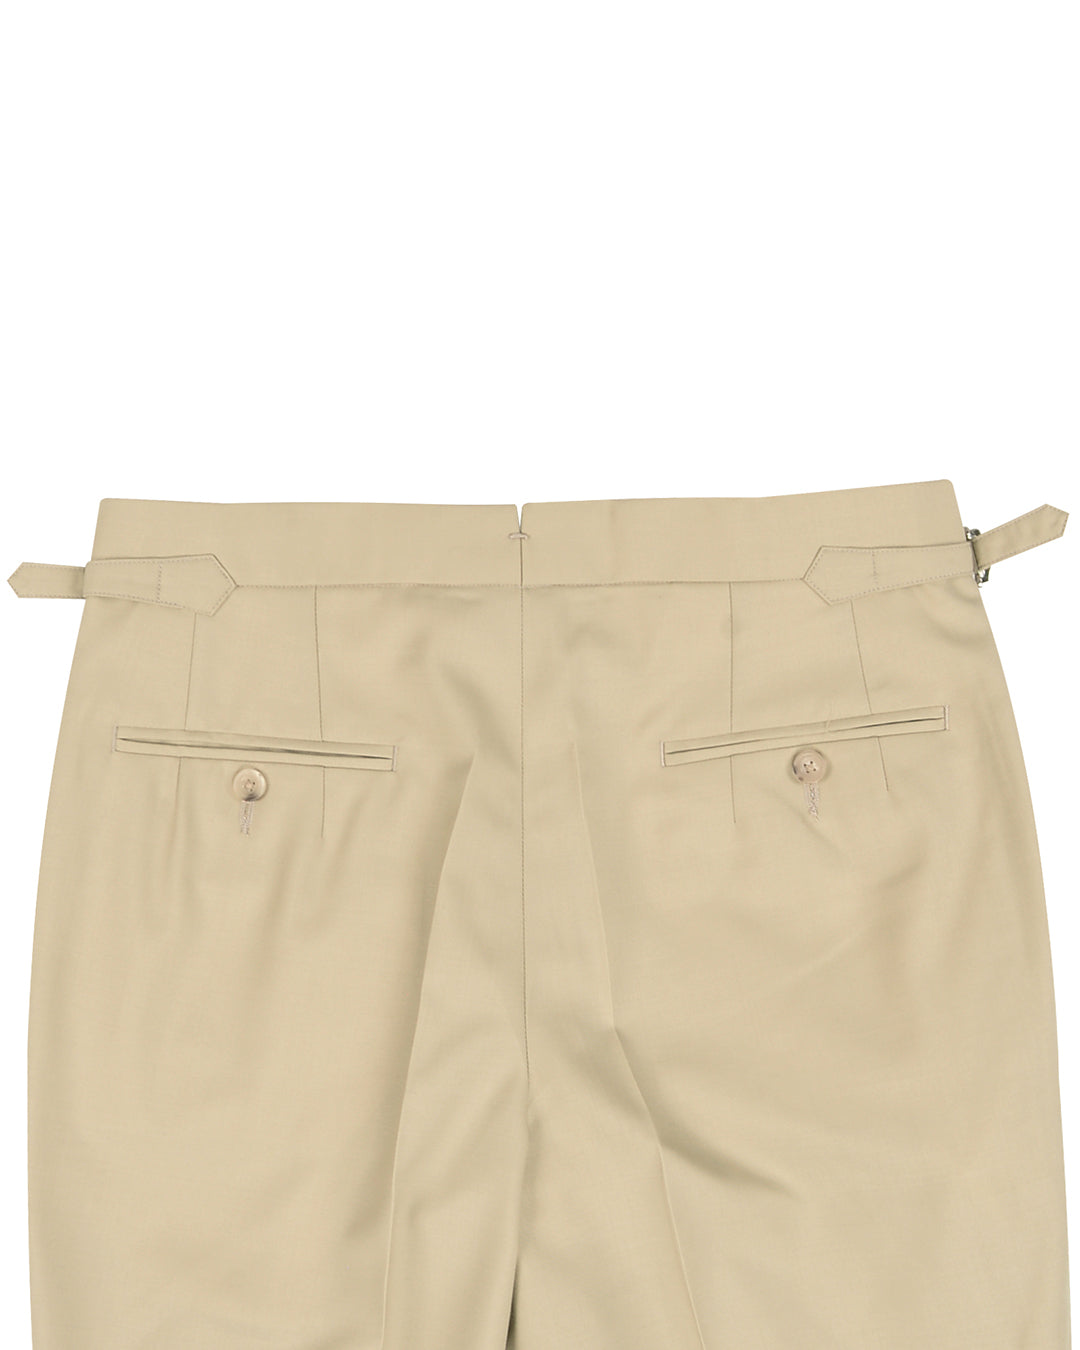 Washable Wool Pants: Khaki-Tan – Luxire Custom Clothing